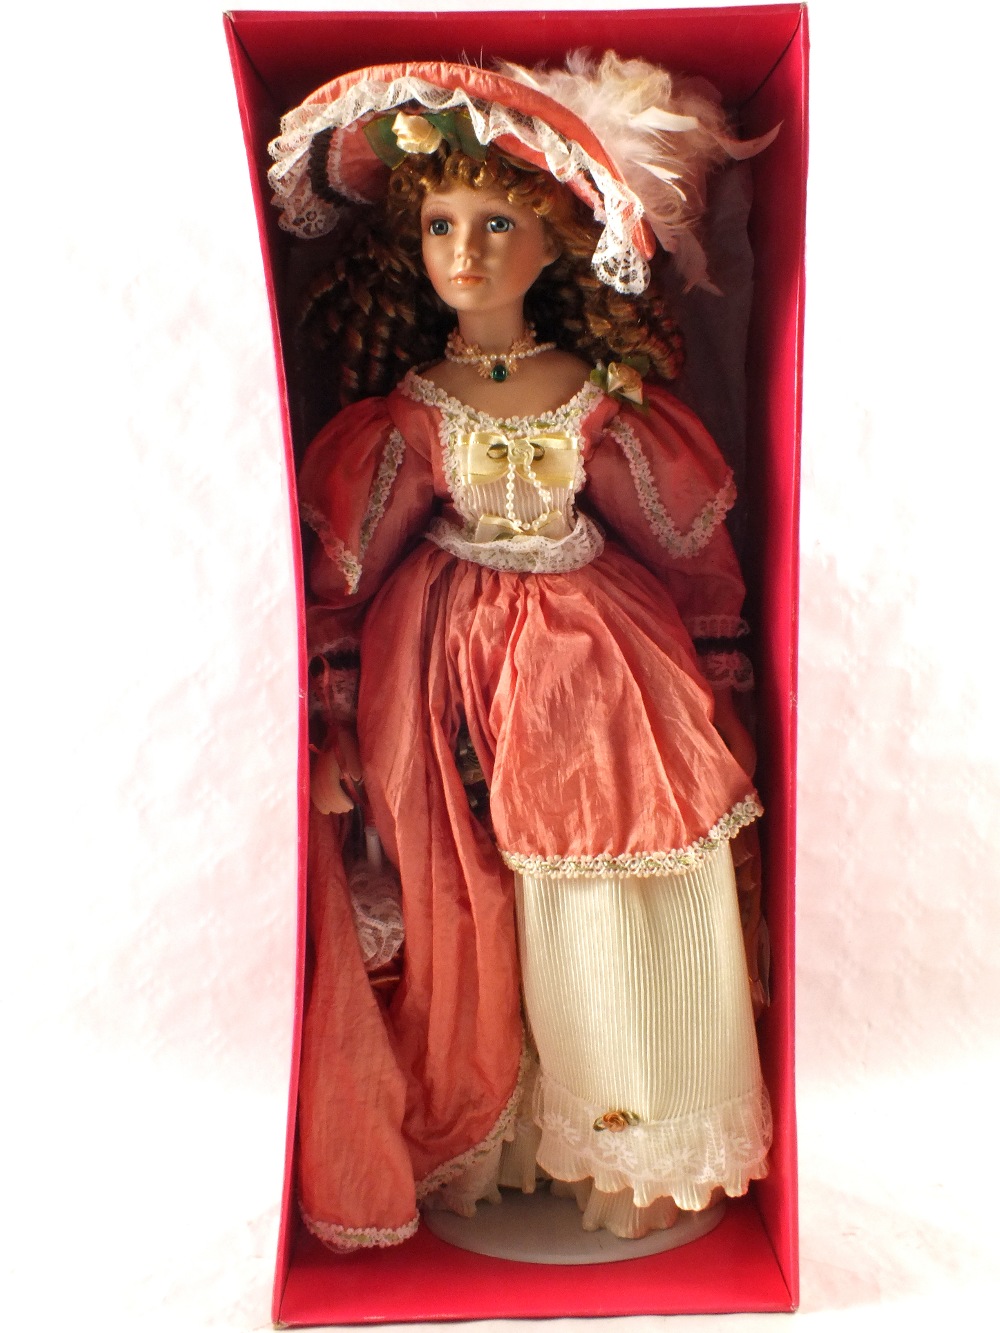 A Leonardo collection porcelain doll, named "Antonia"